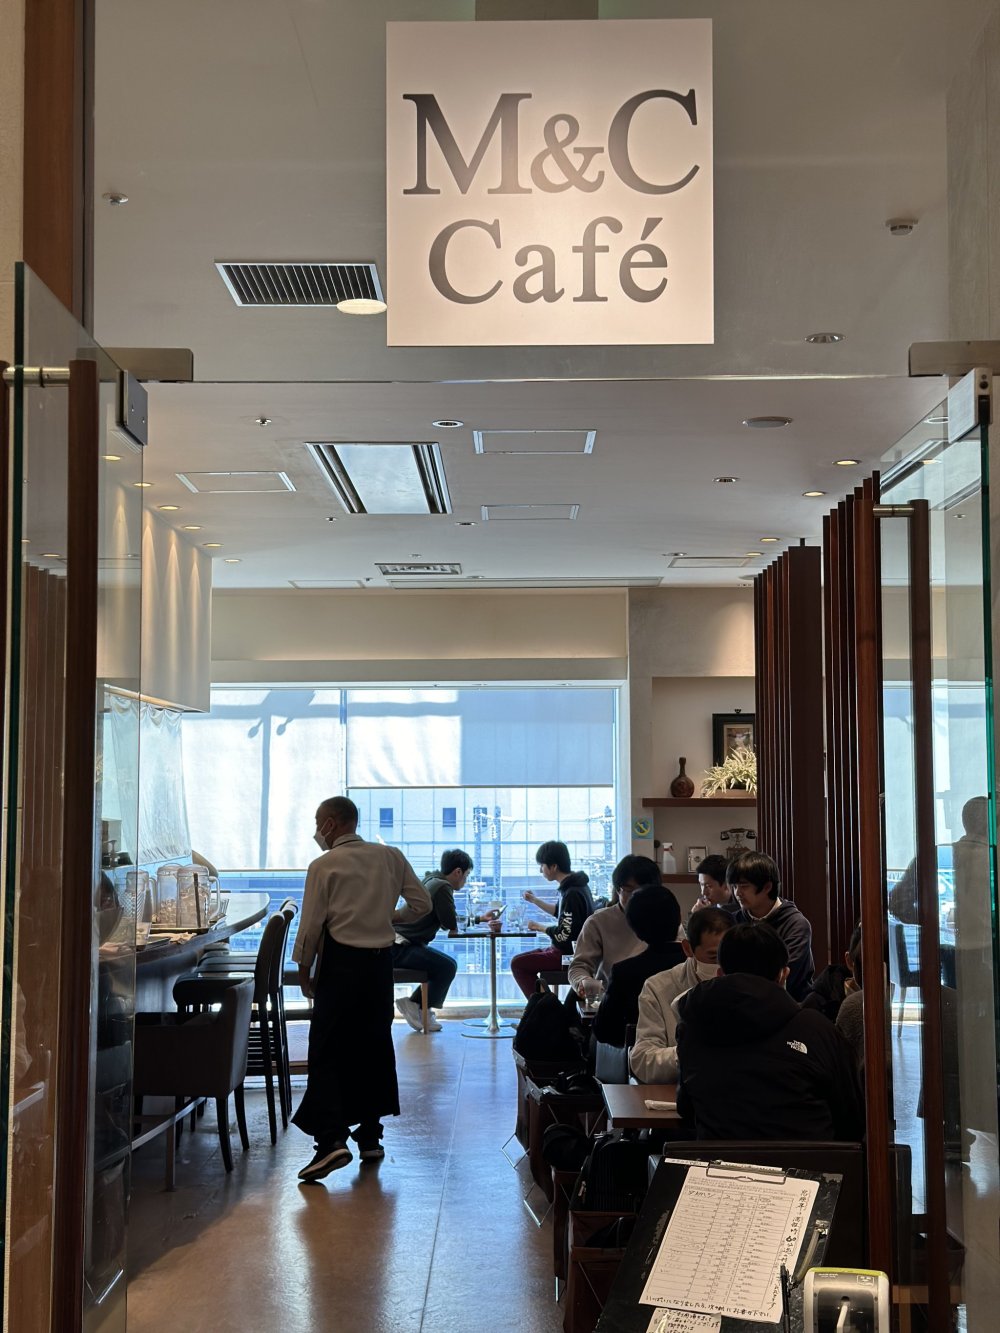 M&C Cafe is in the Maruzen bookstore in Marunouchi